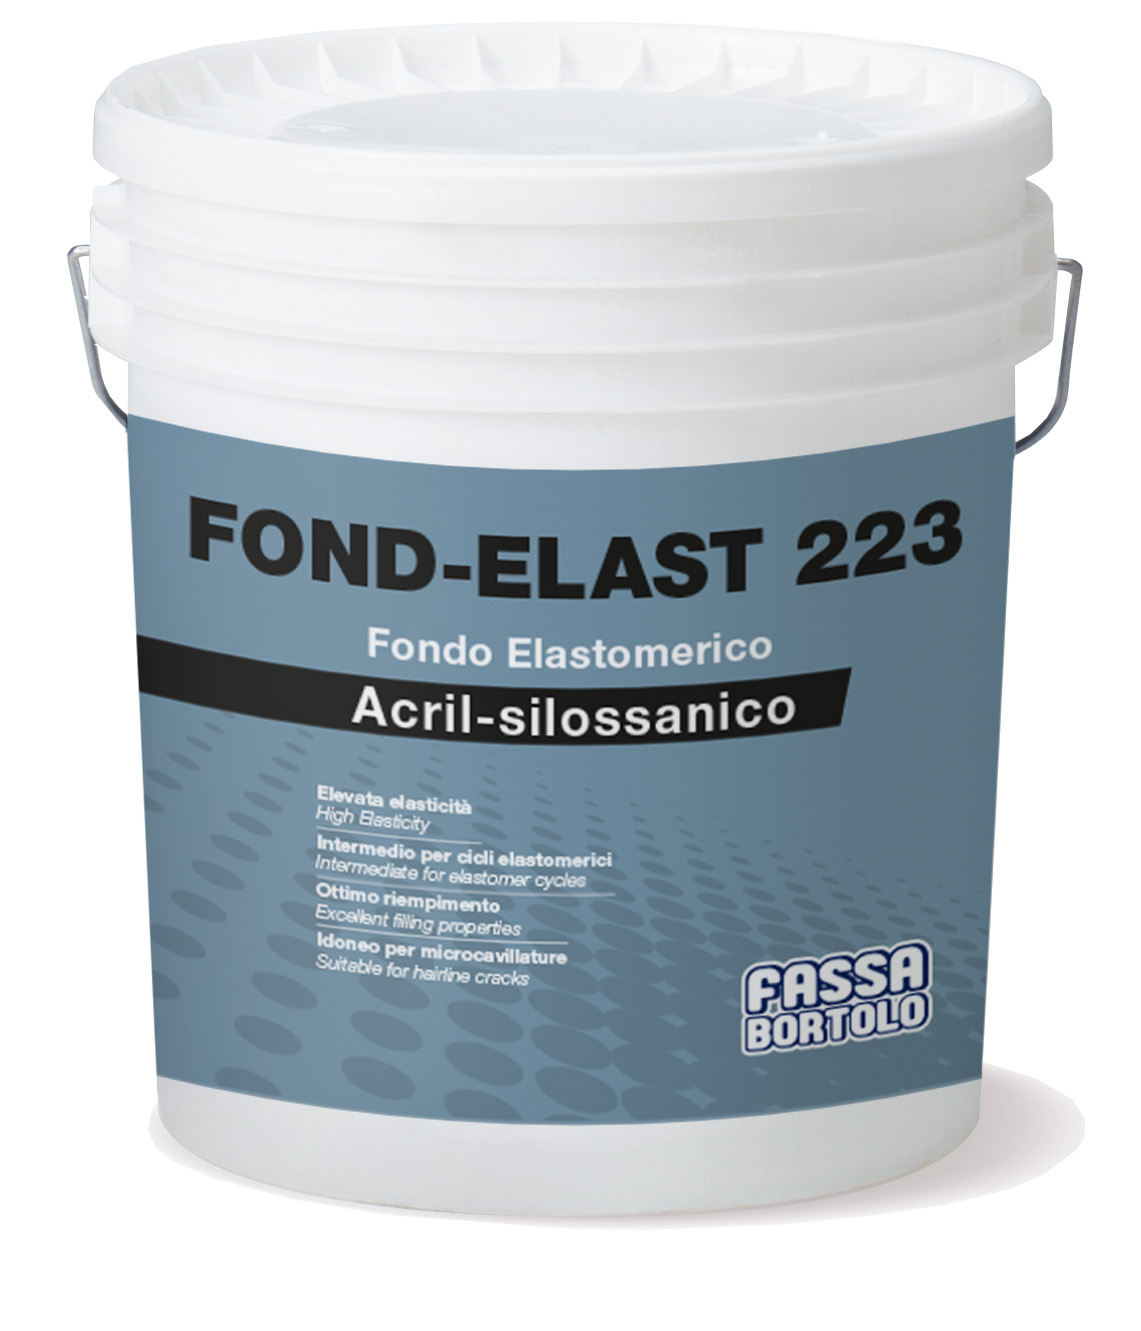 FOND-ELAST 223: Fondo elastomerico acril-silossanico